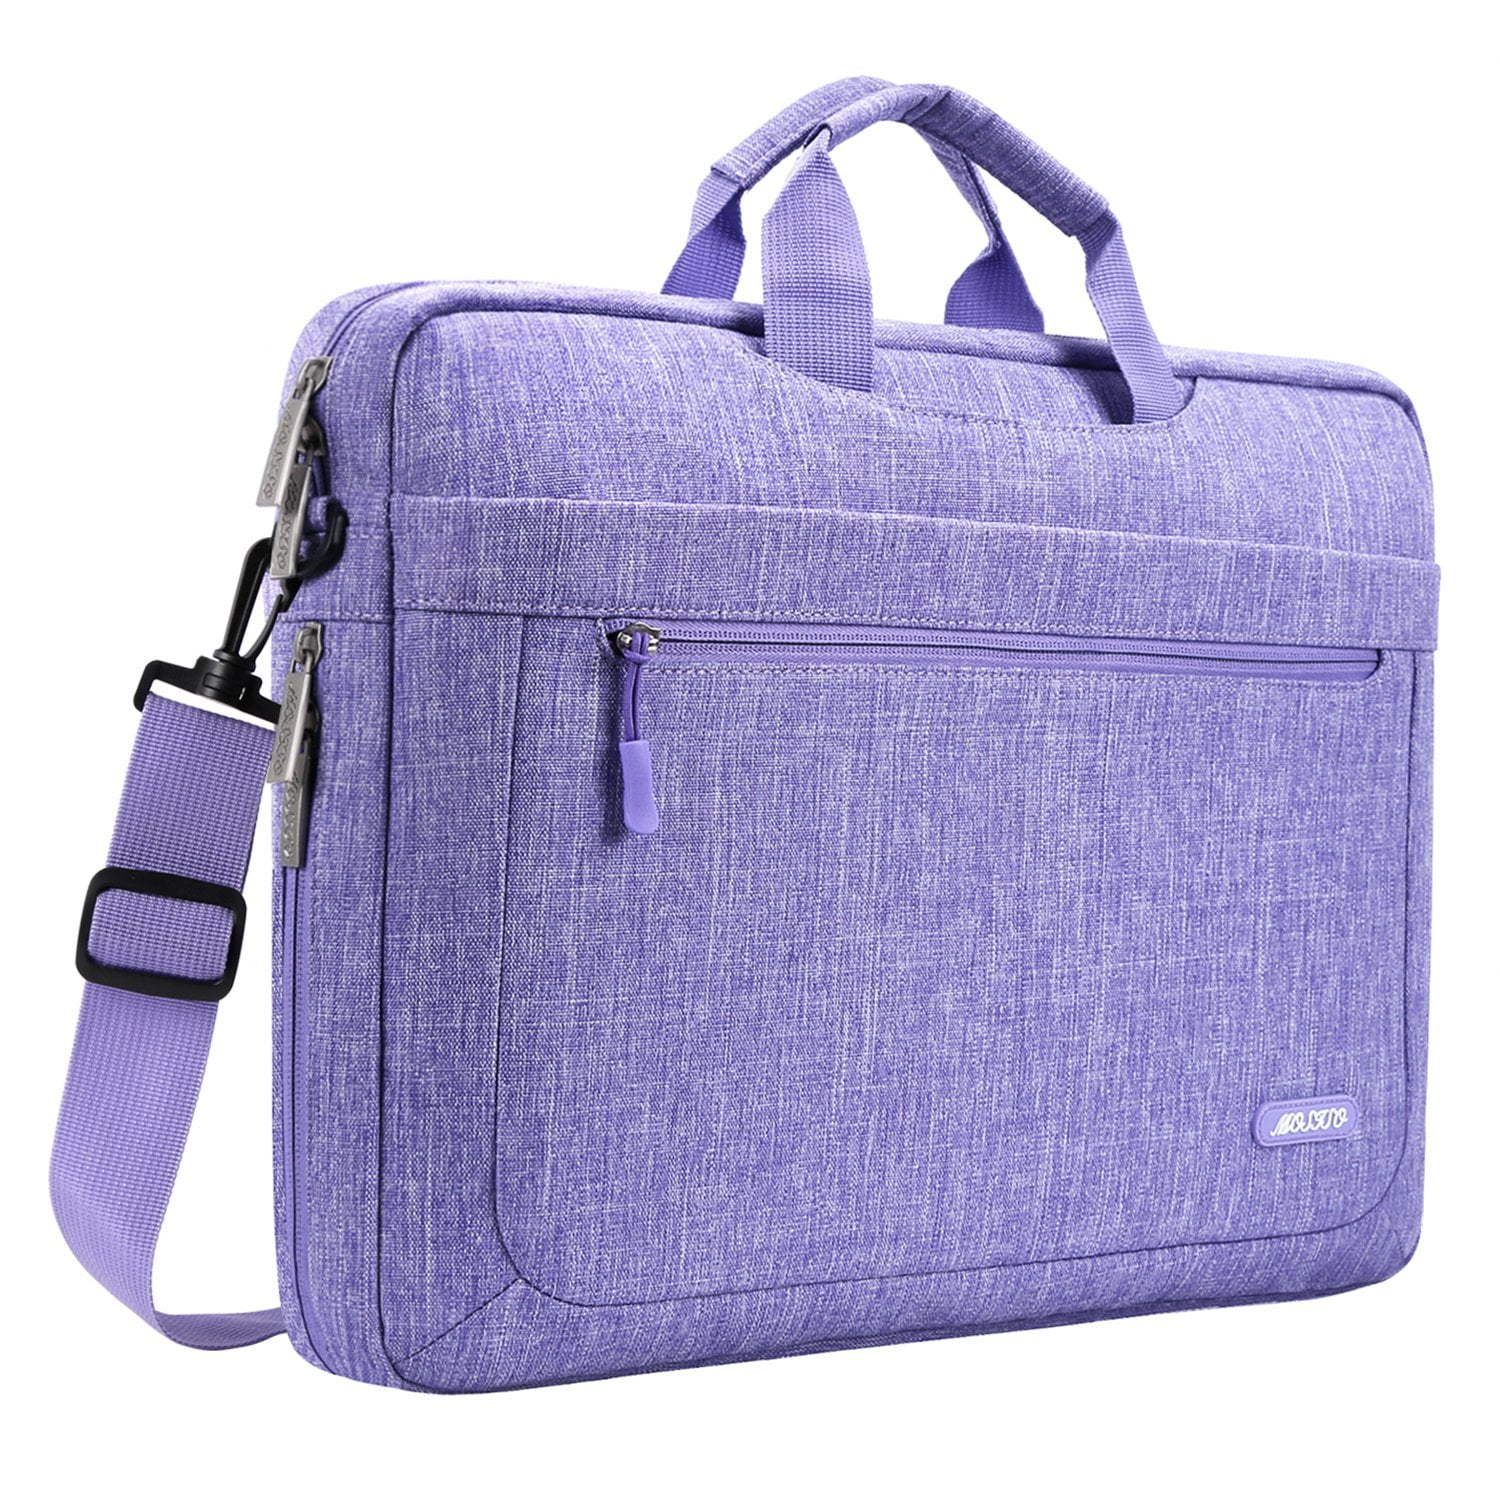 Briefcase Messenger Shoulder Bag for Men Women Laptop Bag Butterflies Design 15-15.4 Inch Laptop Case College Students Business People Office Wor 